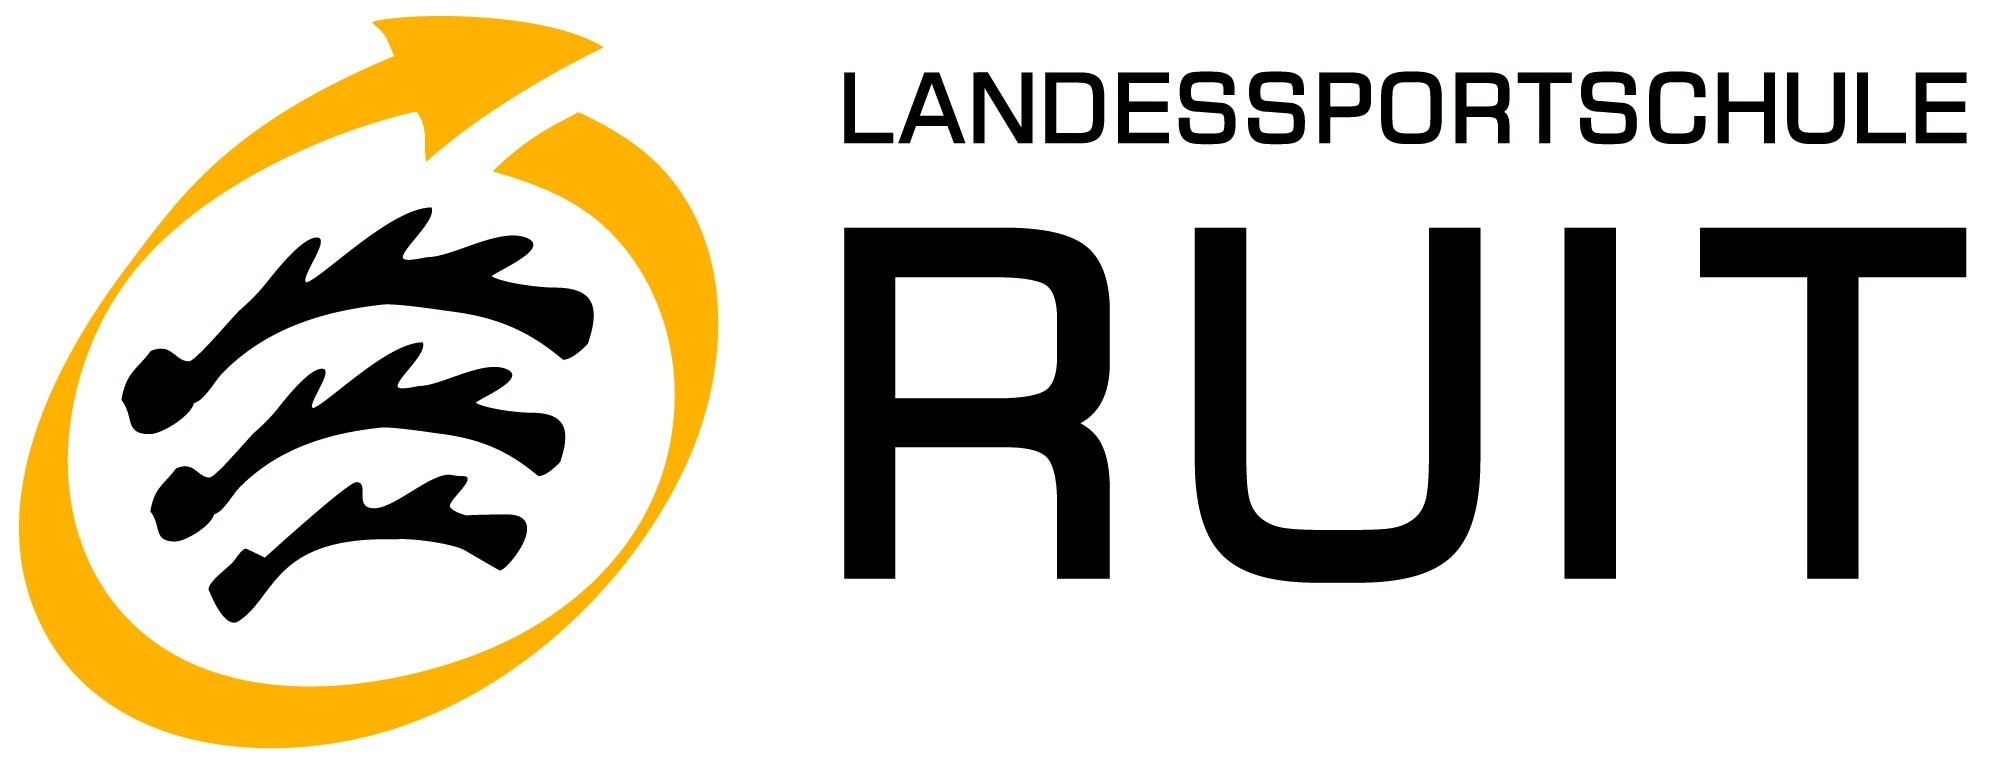 LSSR-Logo